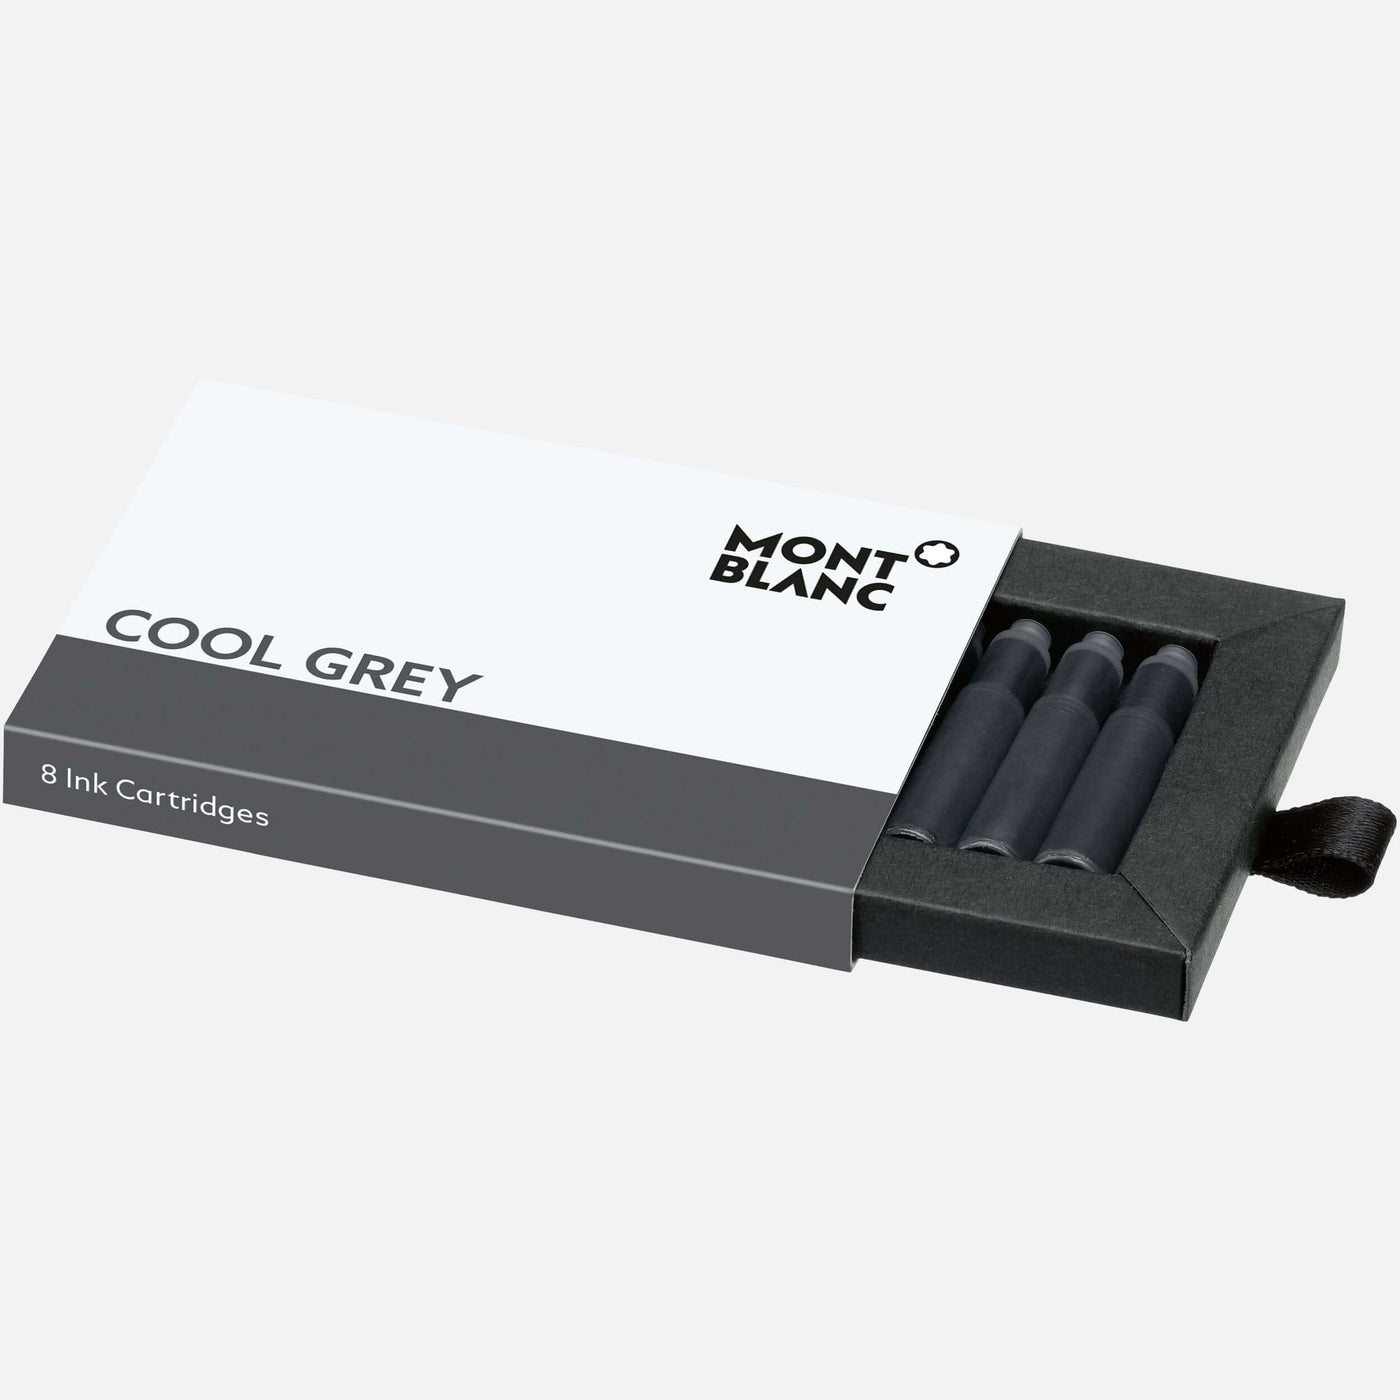 Refill Montblanc Cool Grey Ink Cartridges | Pen Store | Pen Place